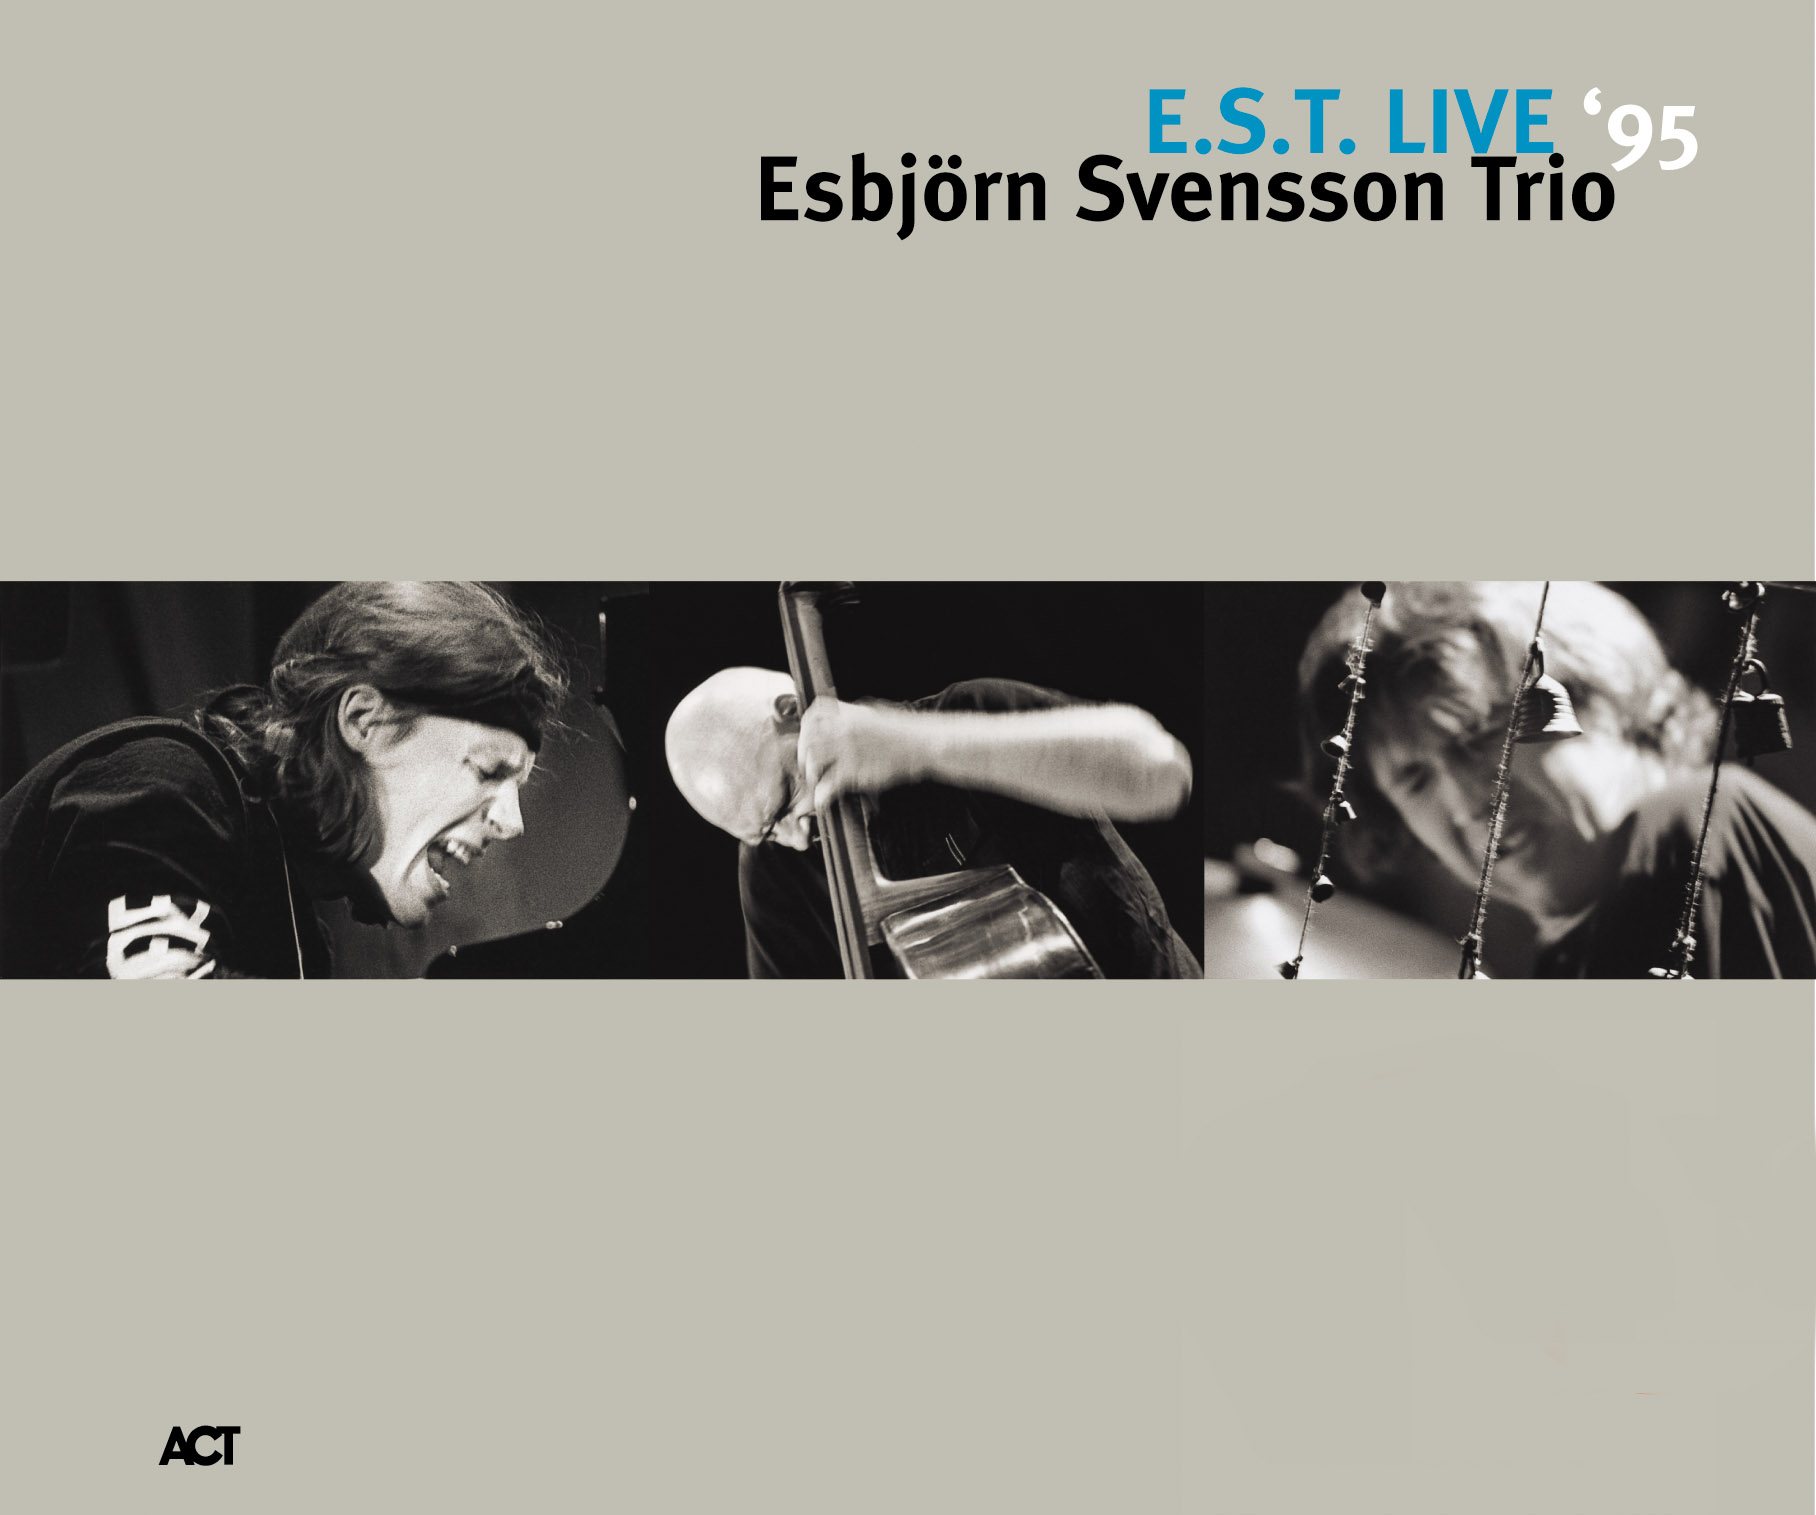 Esbjorn Svensson Trio HD wallpapers, Desktop wallpaper - most viewed